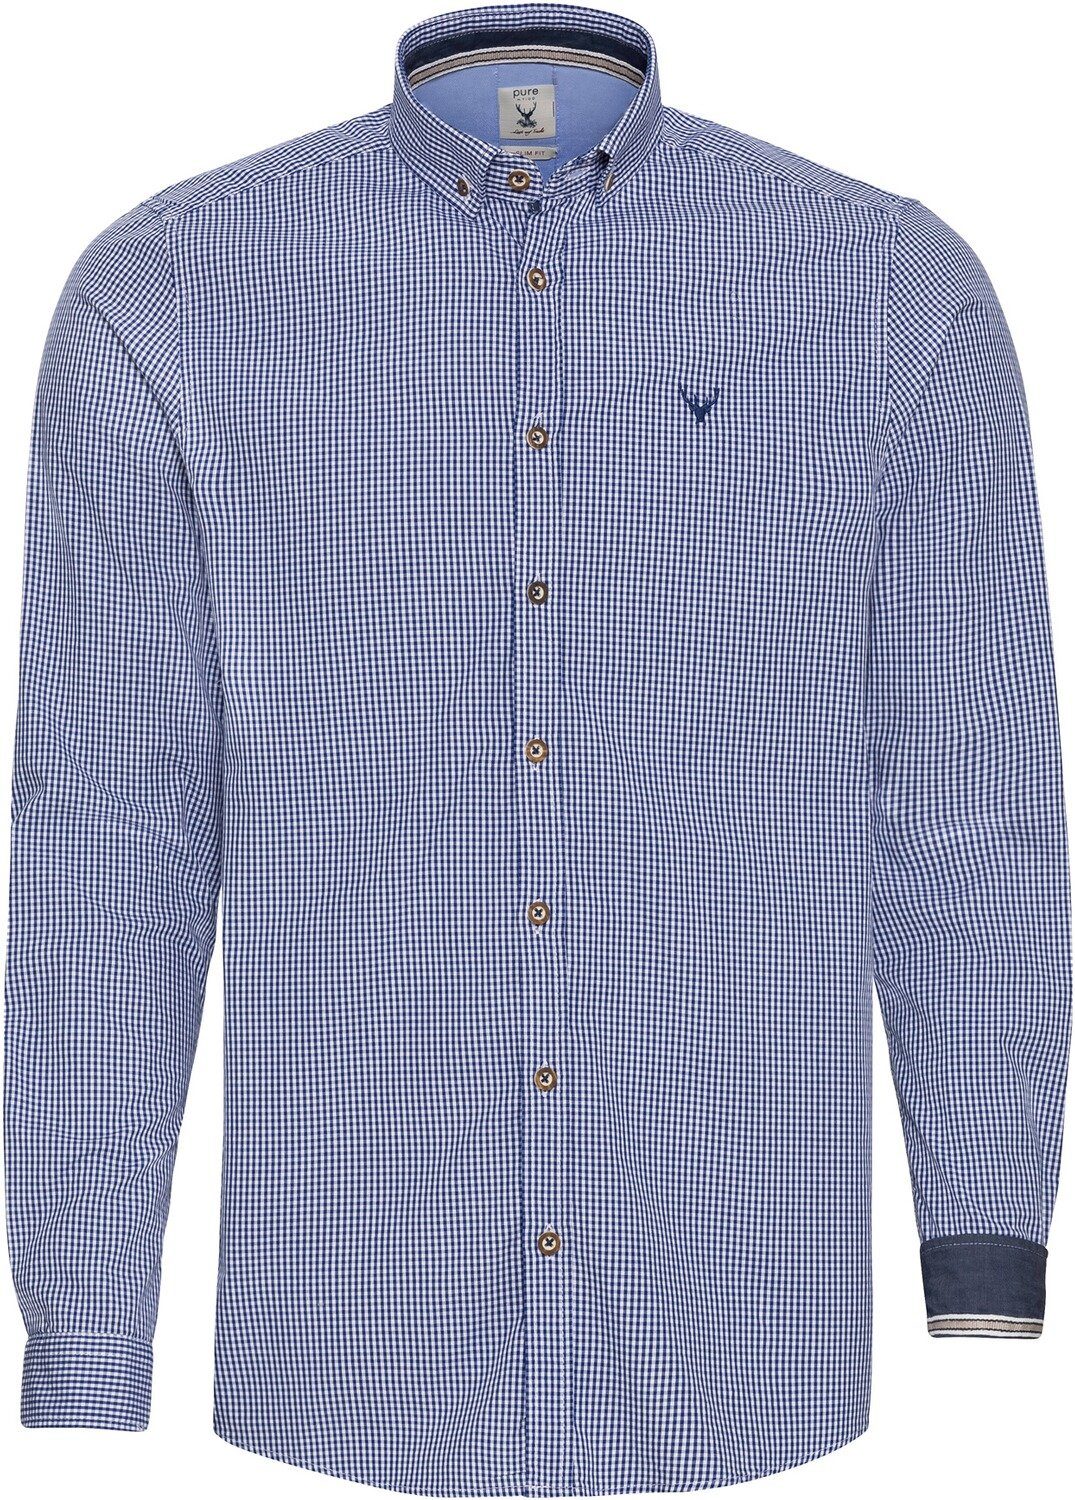 Pure Trachtenhemd Karo-Hemd Slim Fit Blau